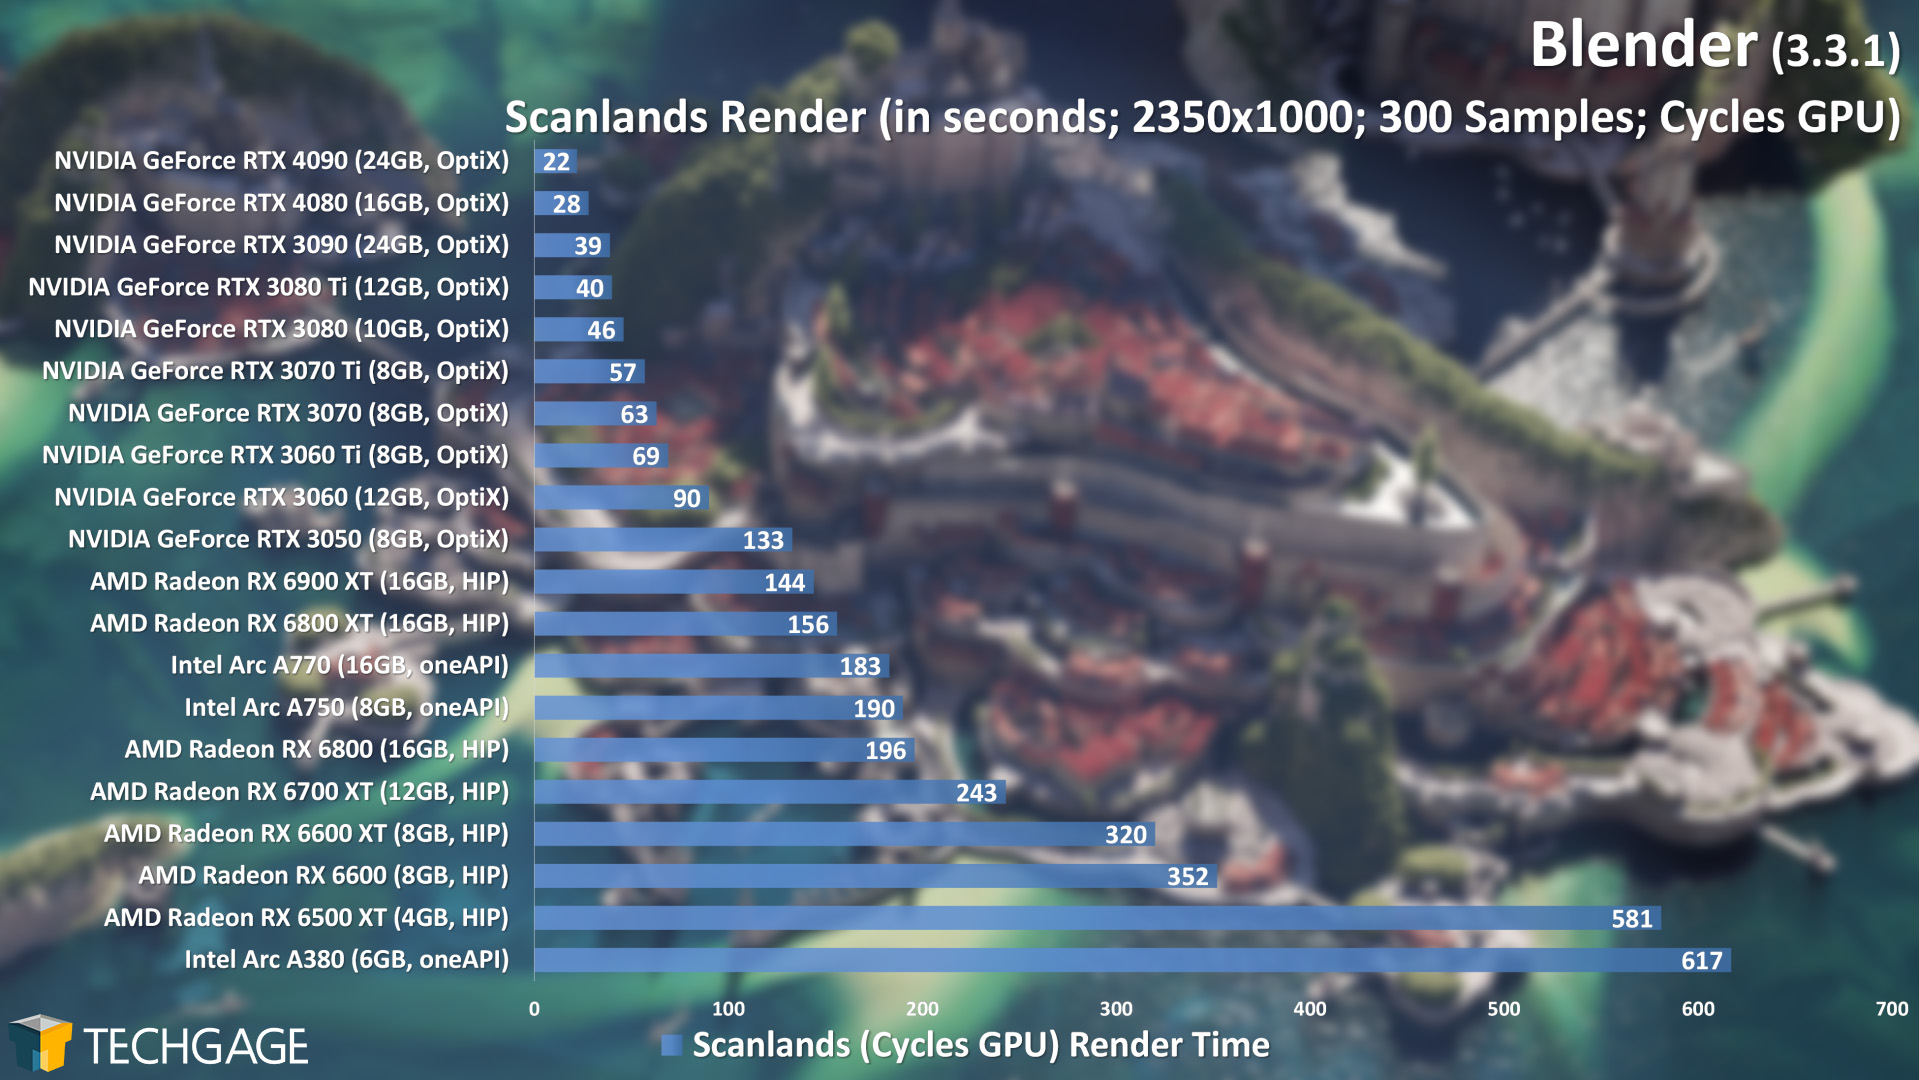 Blender 3.3 - Cycles GPU Render Performance (Scanlands) (NVIDIA GeForce RTX 4080)